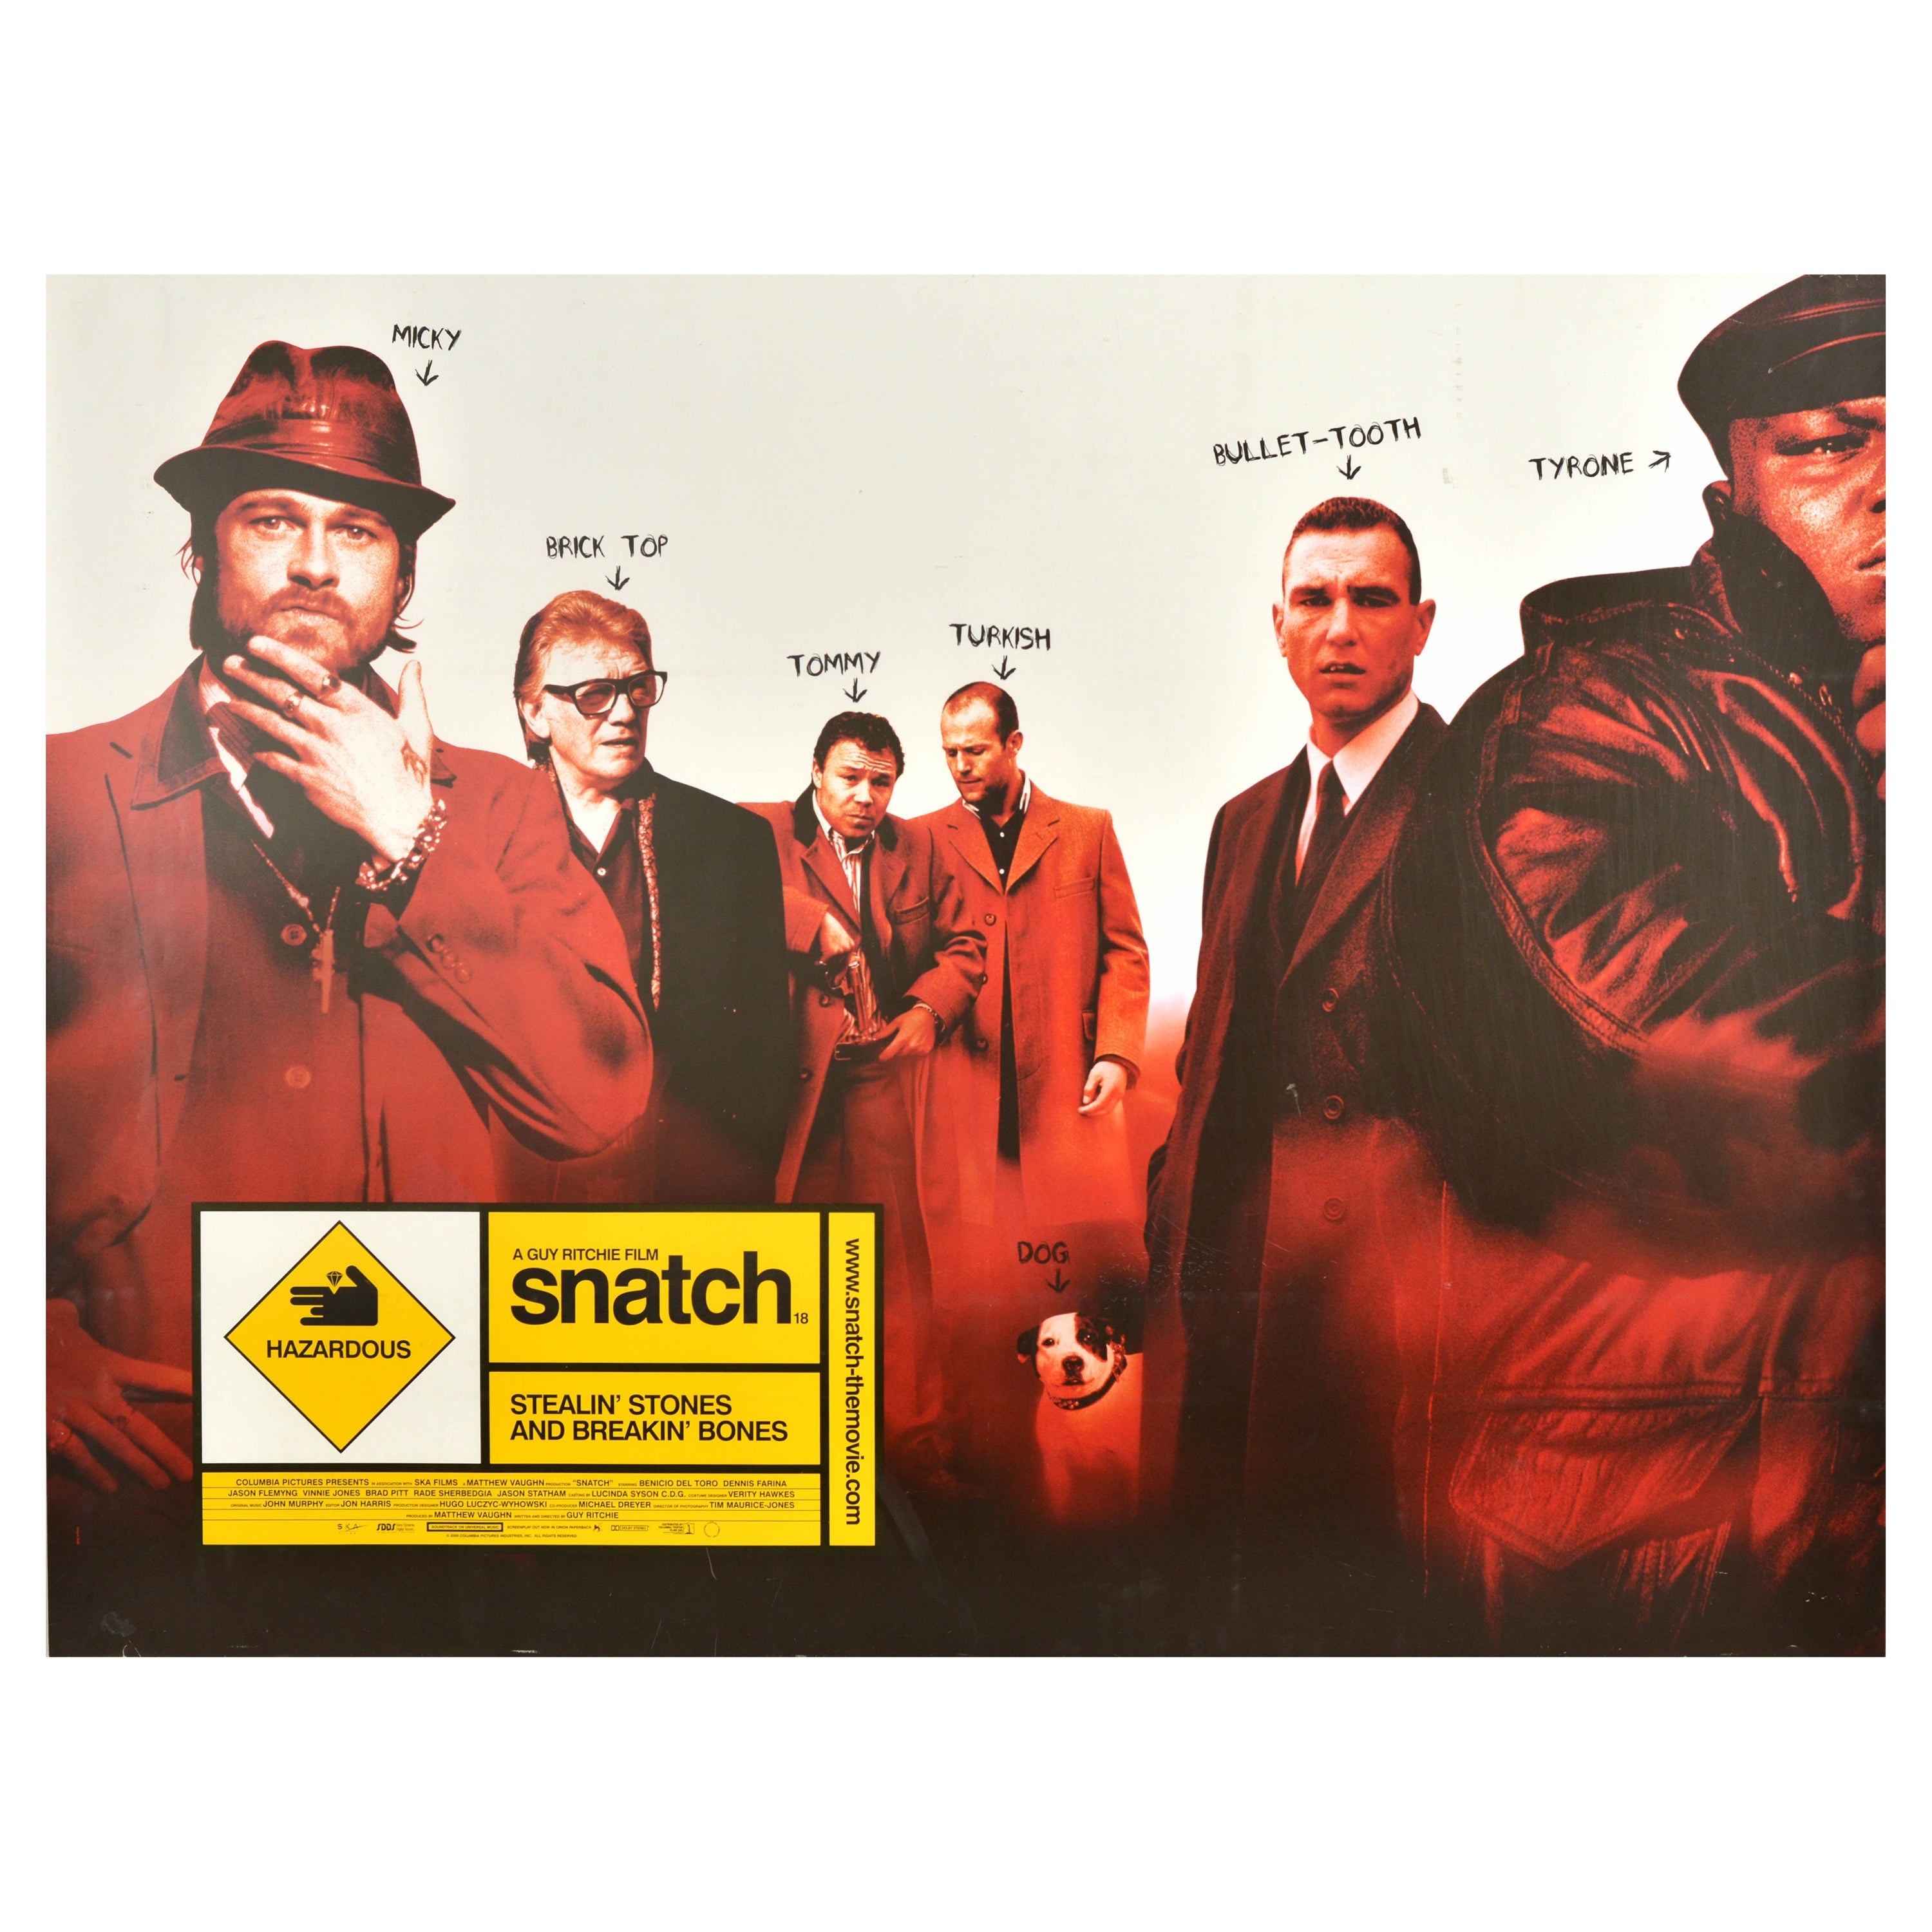 Original Vintage Film Poster For Snatch Crime Comedy Movie Guy Ritchie Brad Pitt For Sale